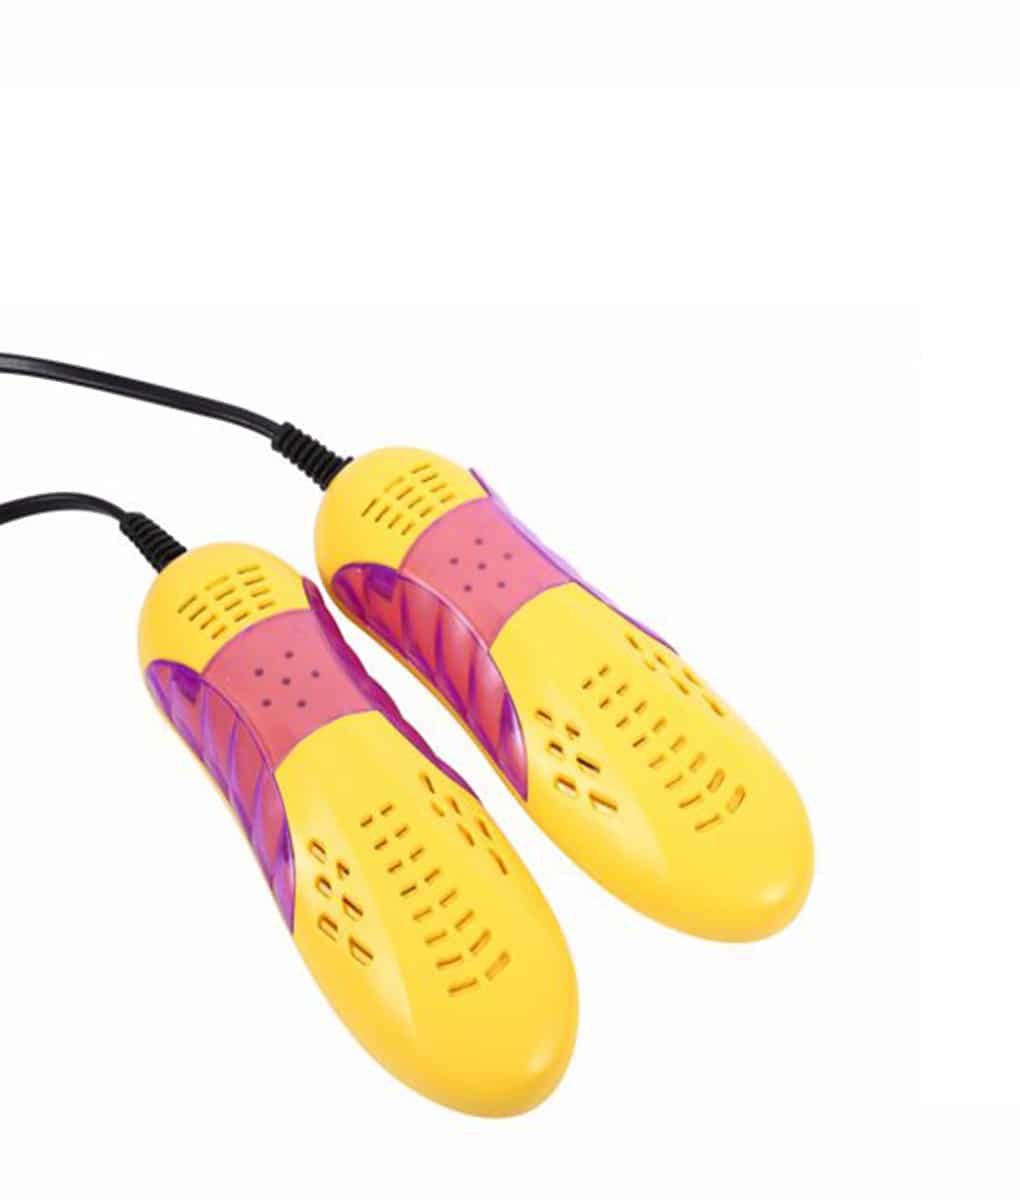 Shoe Dryer Boot Deodorant Dehumidify Device Voilet Light Snowboard Skiing Boots 